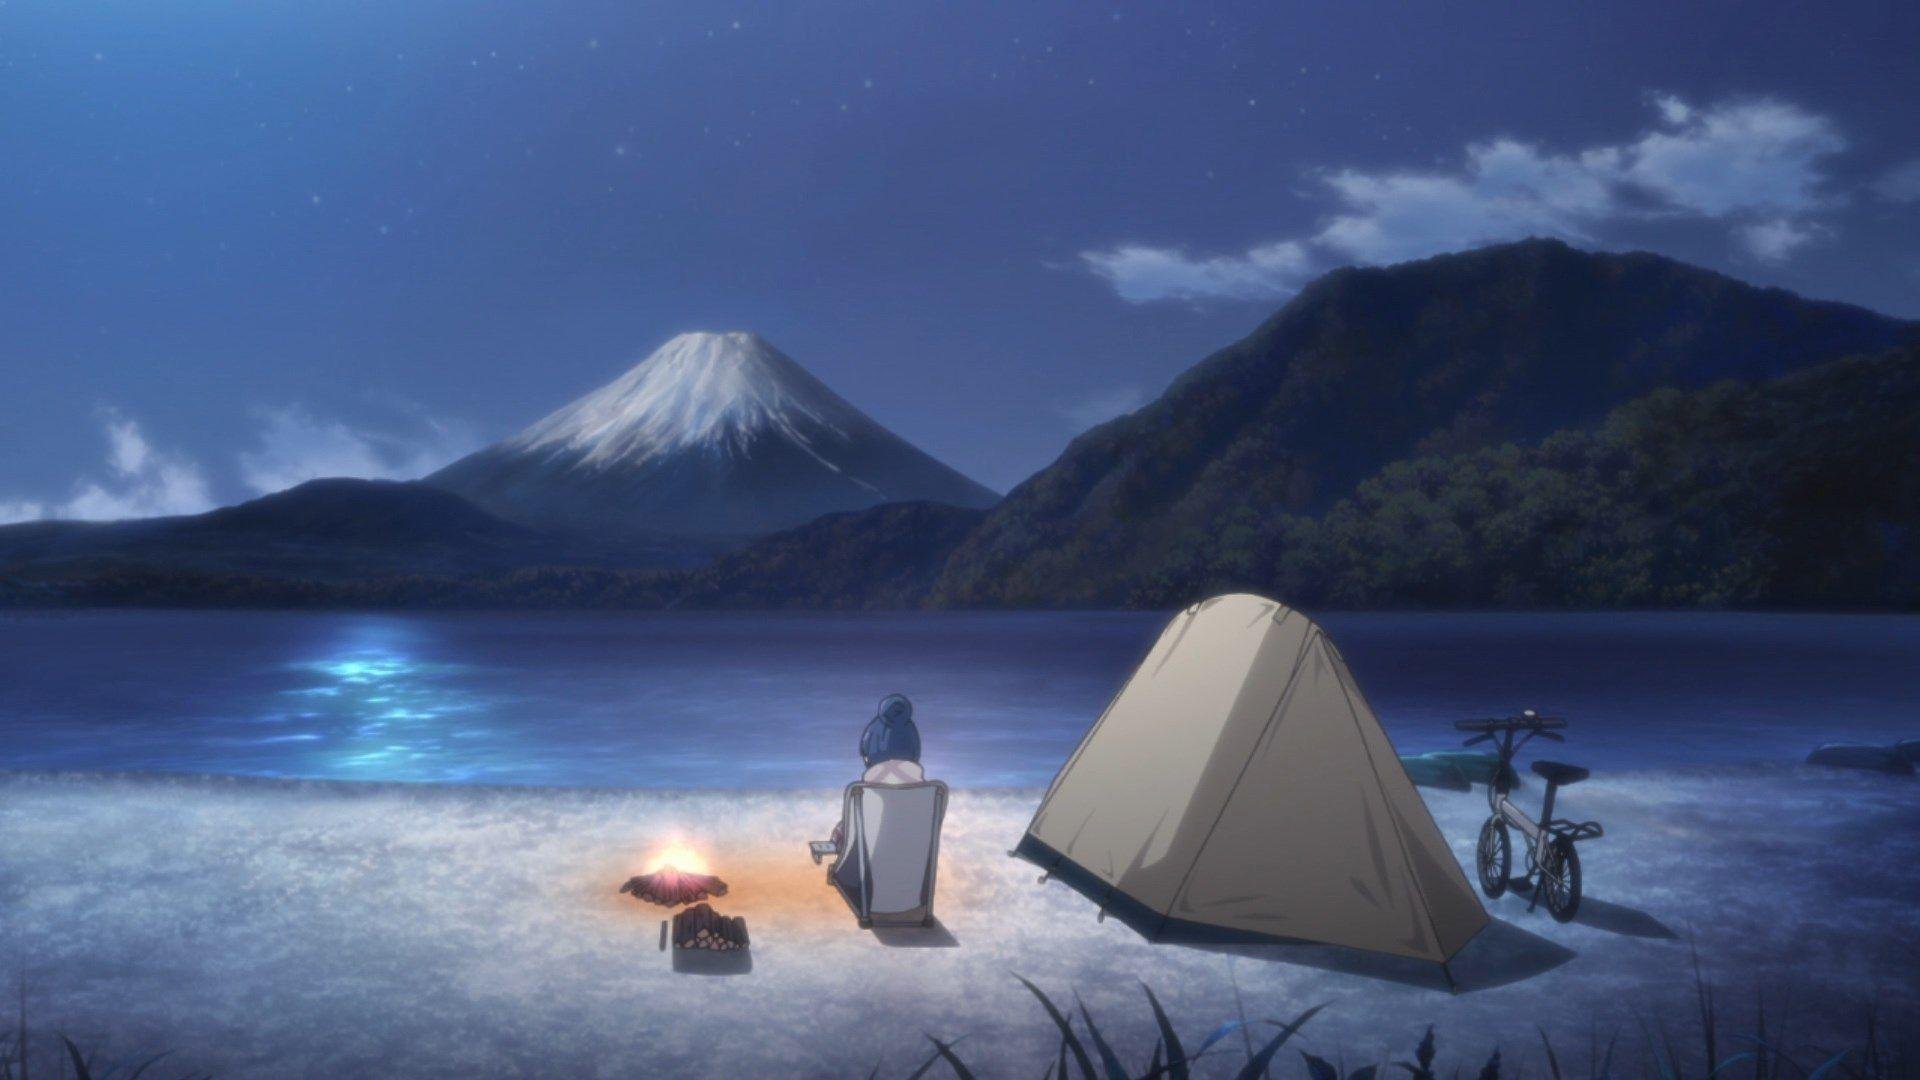 Yuru camping. Yuru Camp палатка. Yuru Camp Фудзияма. Yuru Camp обои.